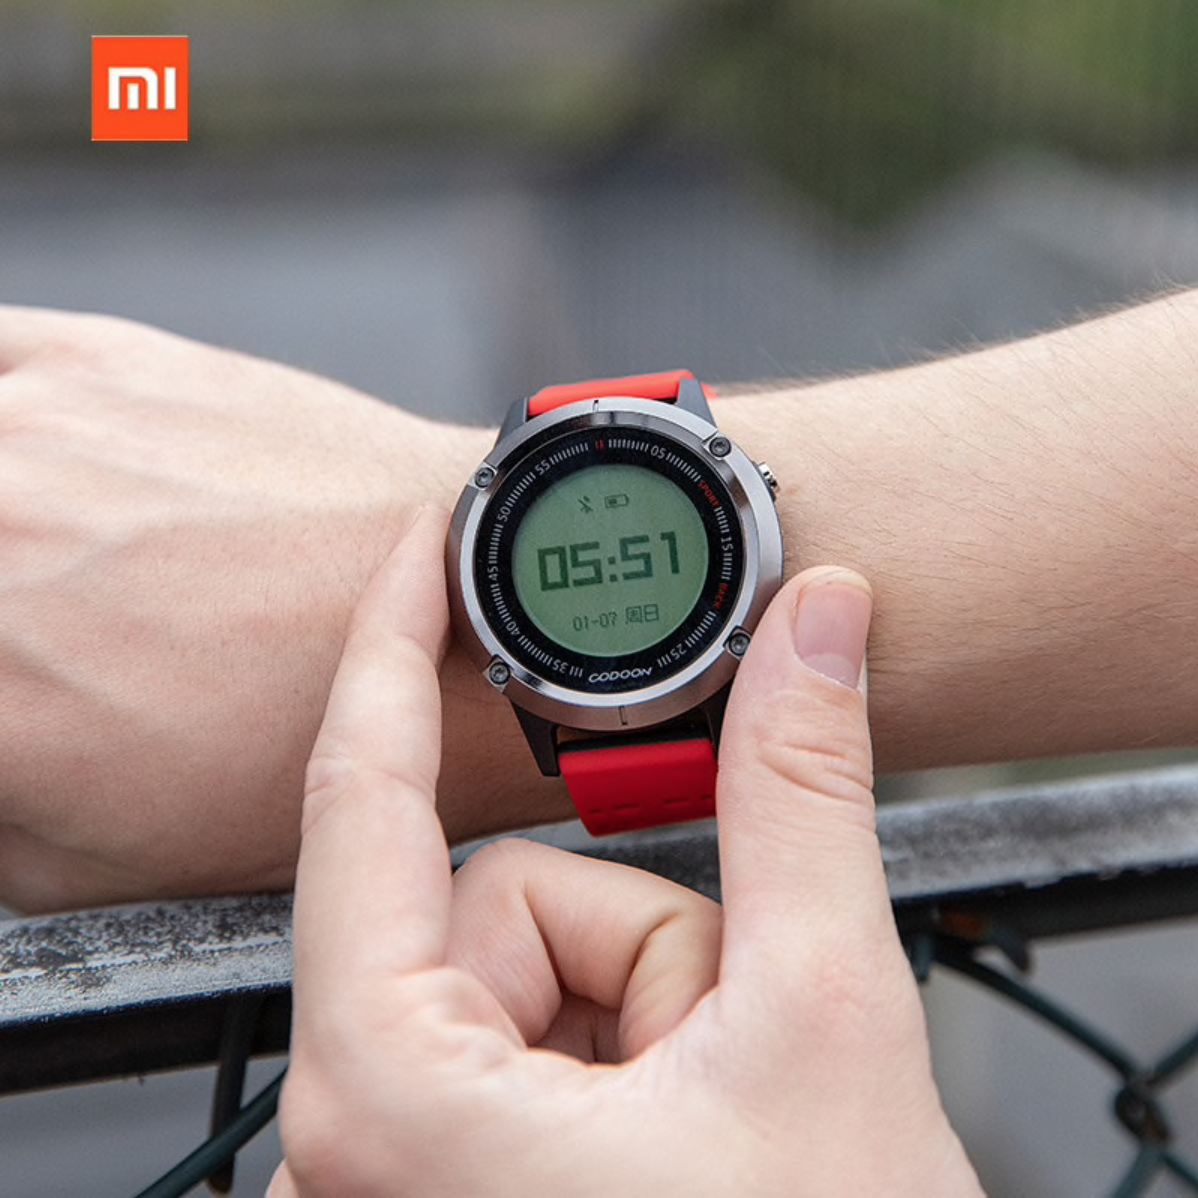 Shark s1 watch. Xiaomi watch s1. Xiaomi Codoon s1. Xiaomi watch s1 gl. Xiaomi watch s1 Black.